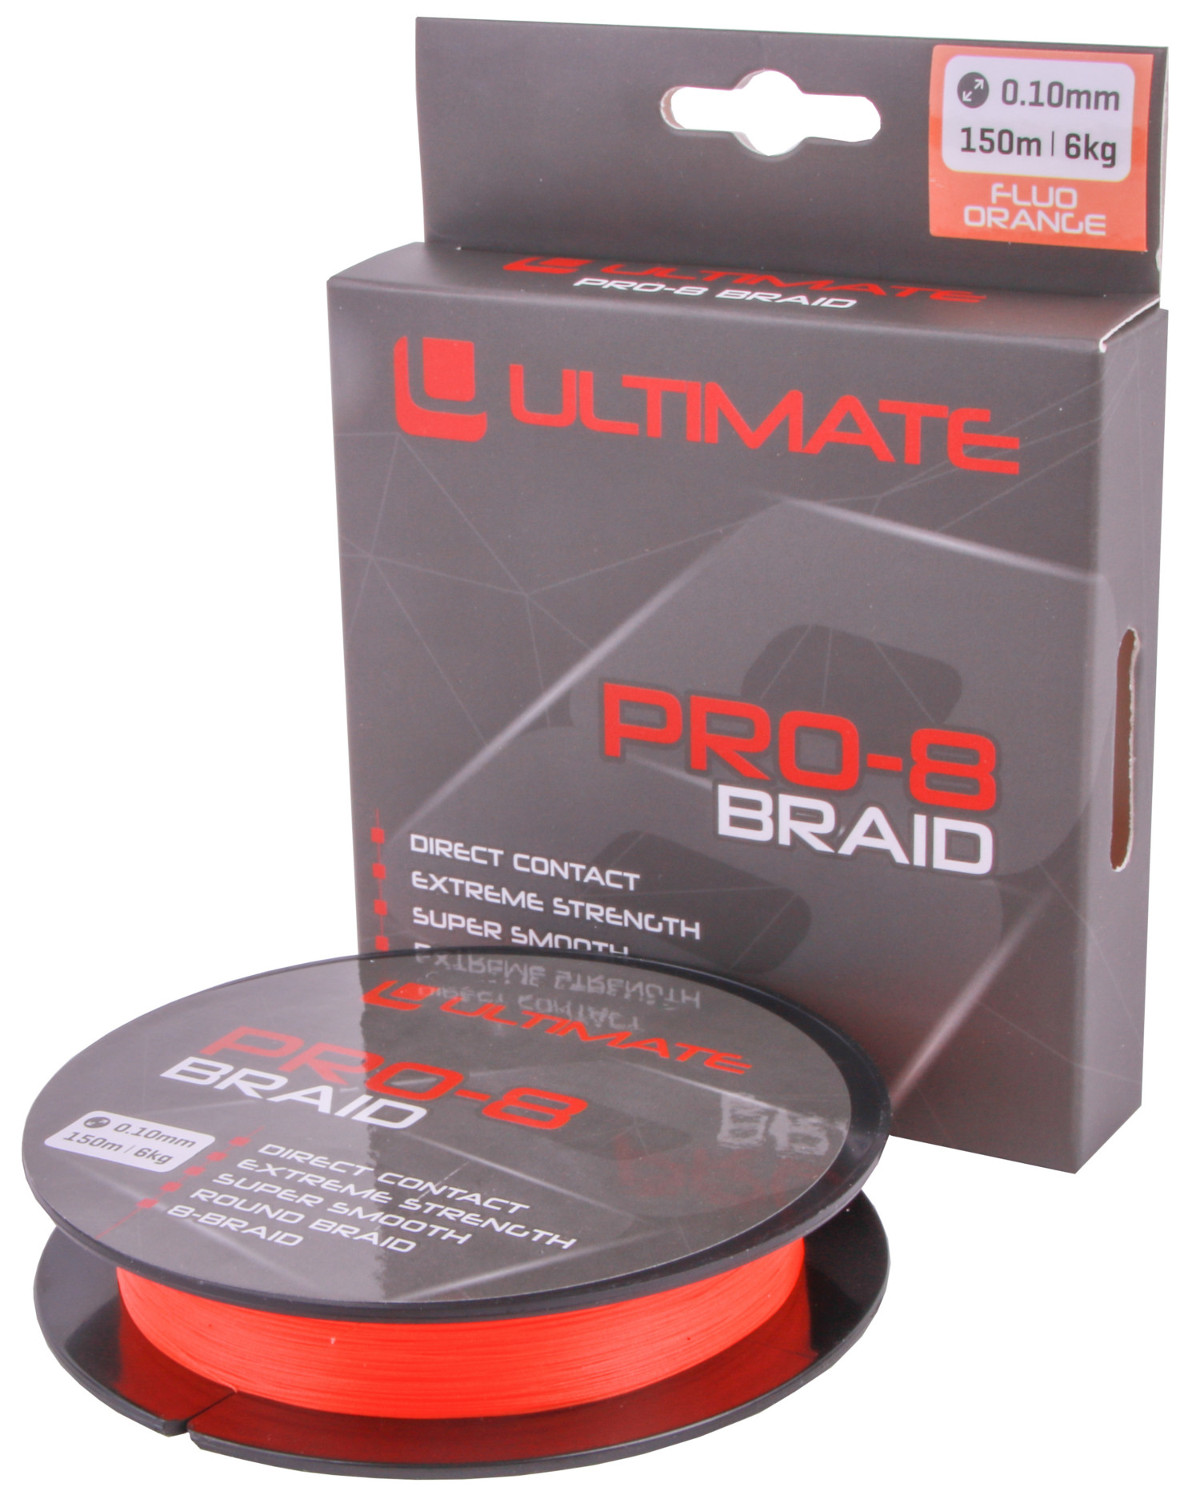 Ultimate Pro-8 Braid 0.25mm 16kg 150m Fluo Orange